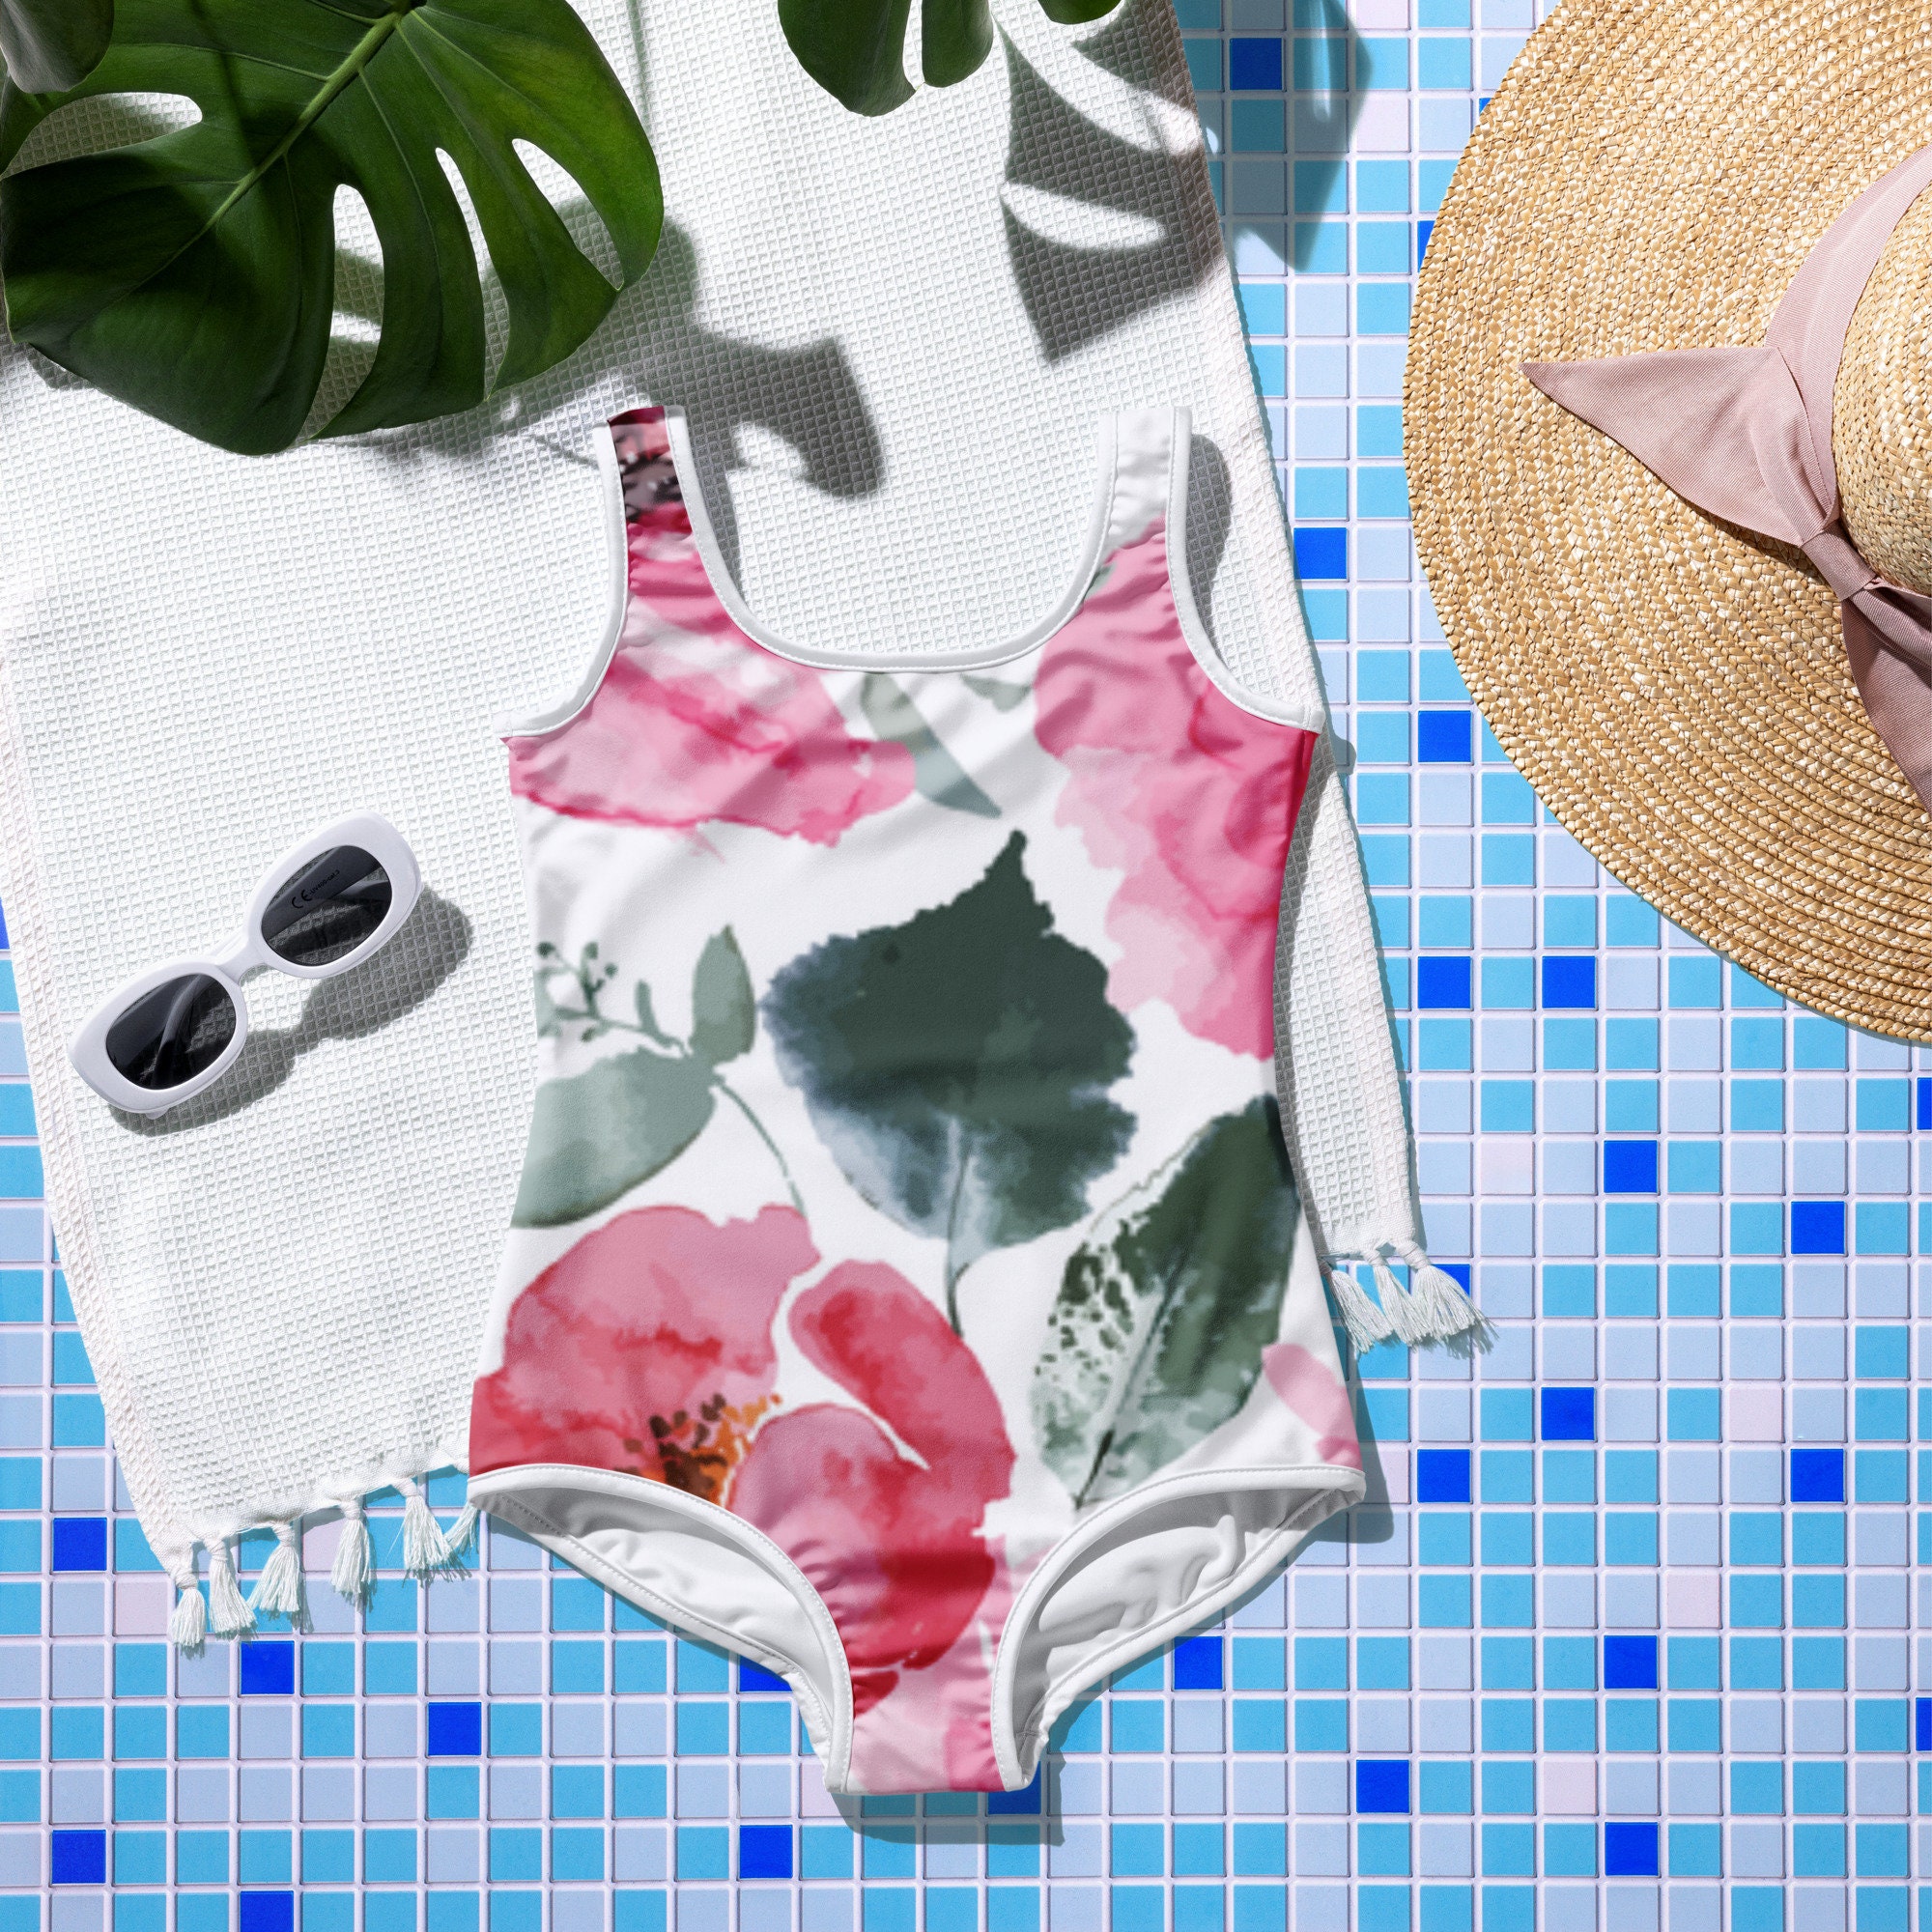  Bluey & Bingo Infant Baby Girls One-Piece Bathing Suit